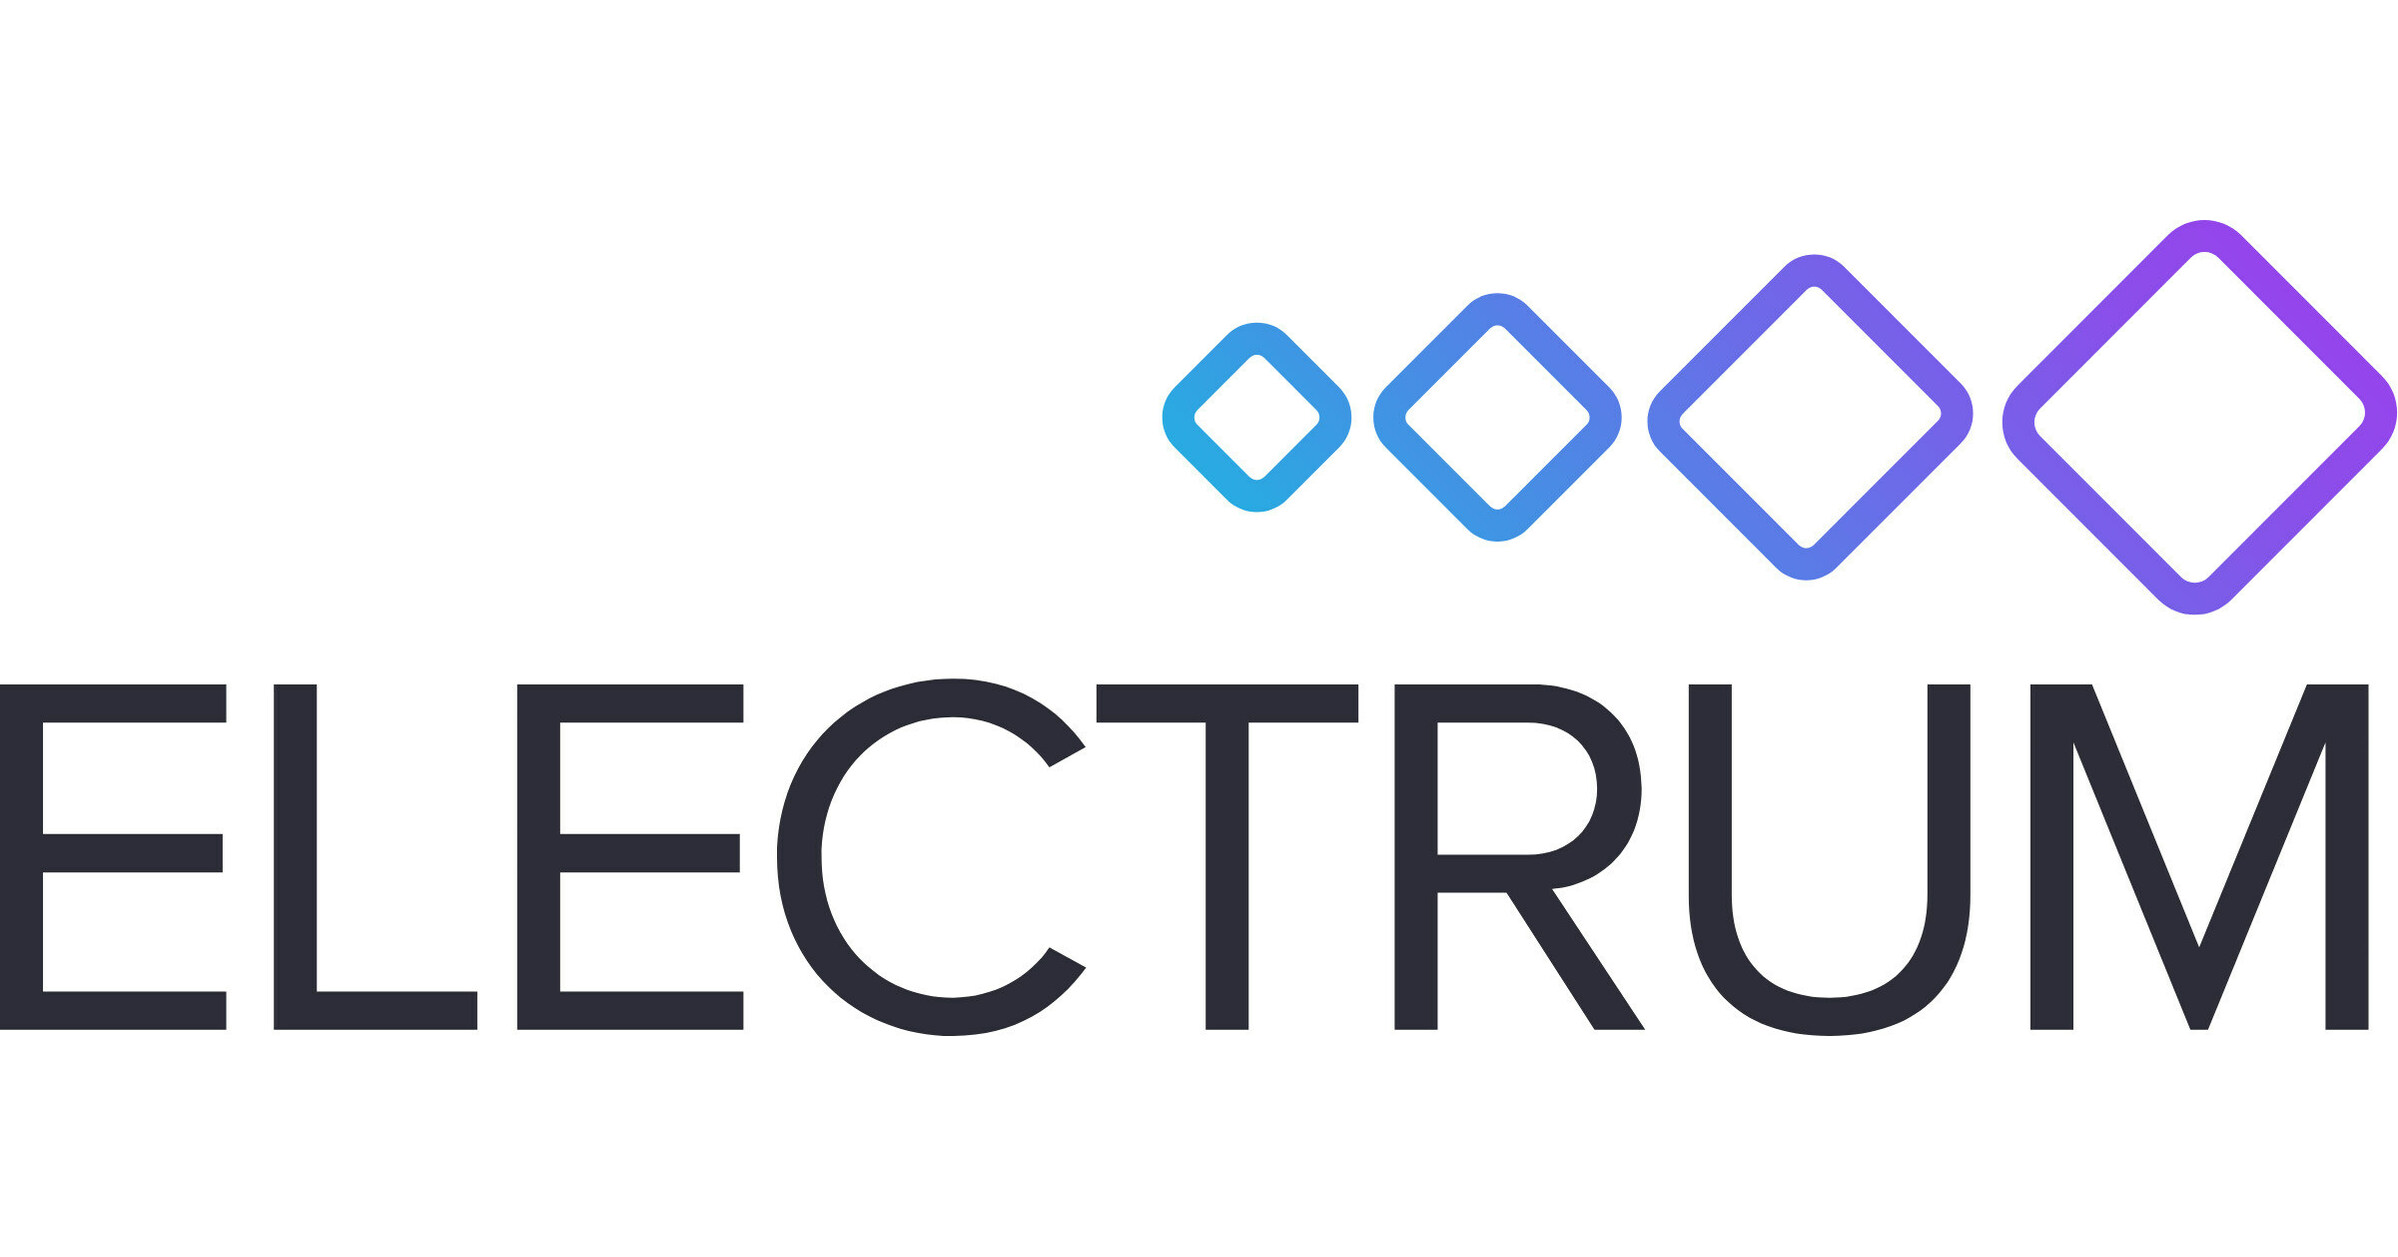 Electrum - Competitors and Alternatives - Tracxn